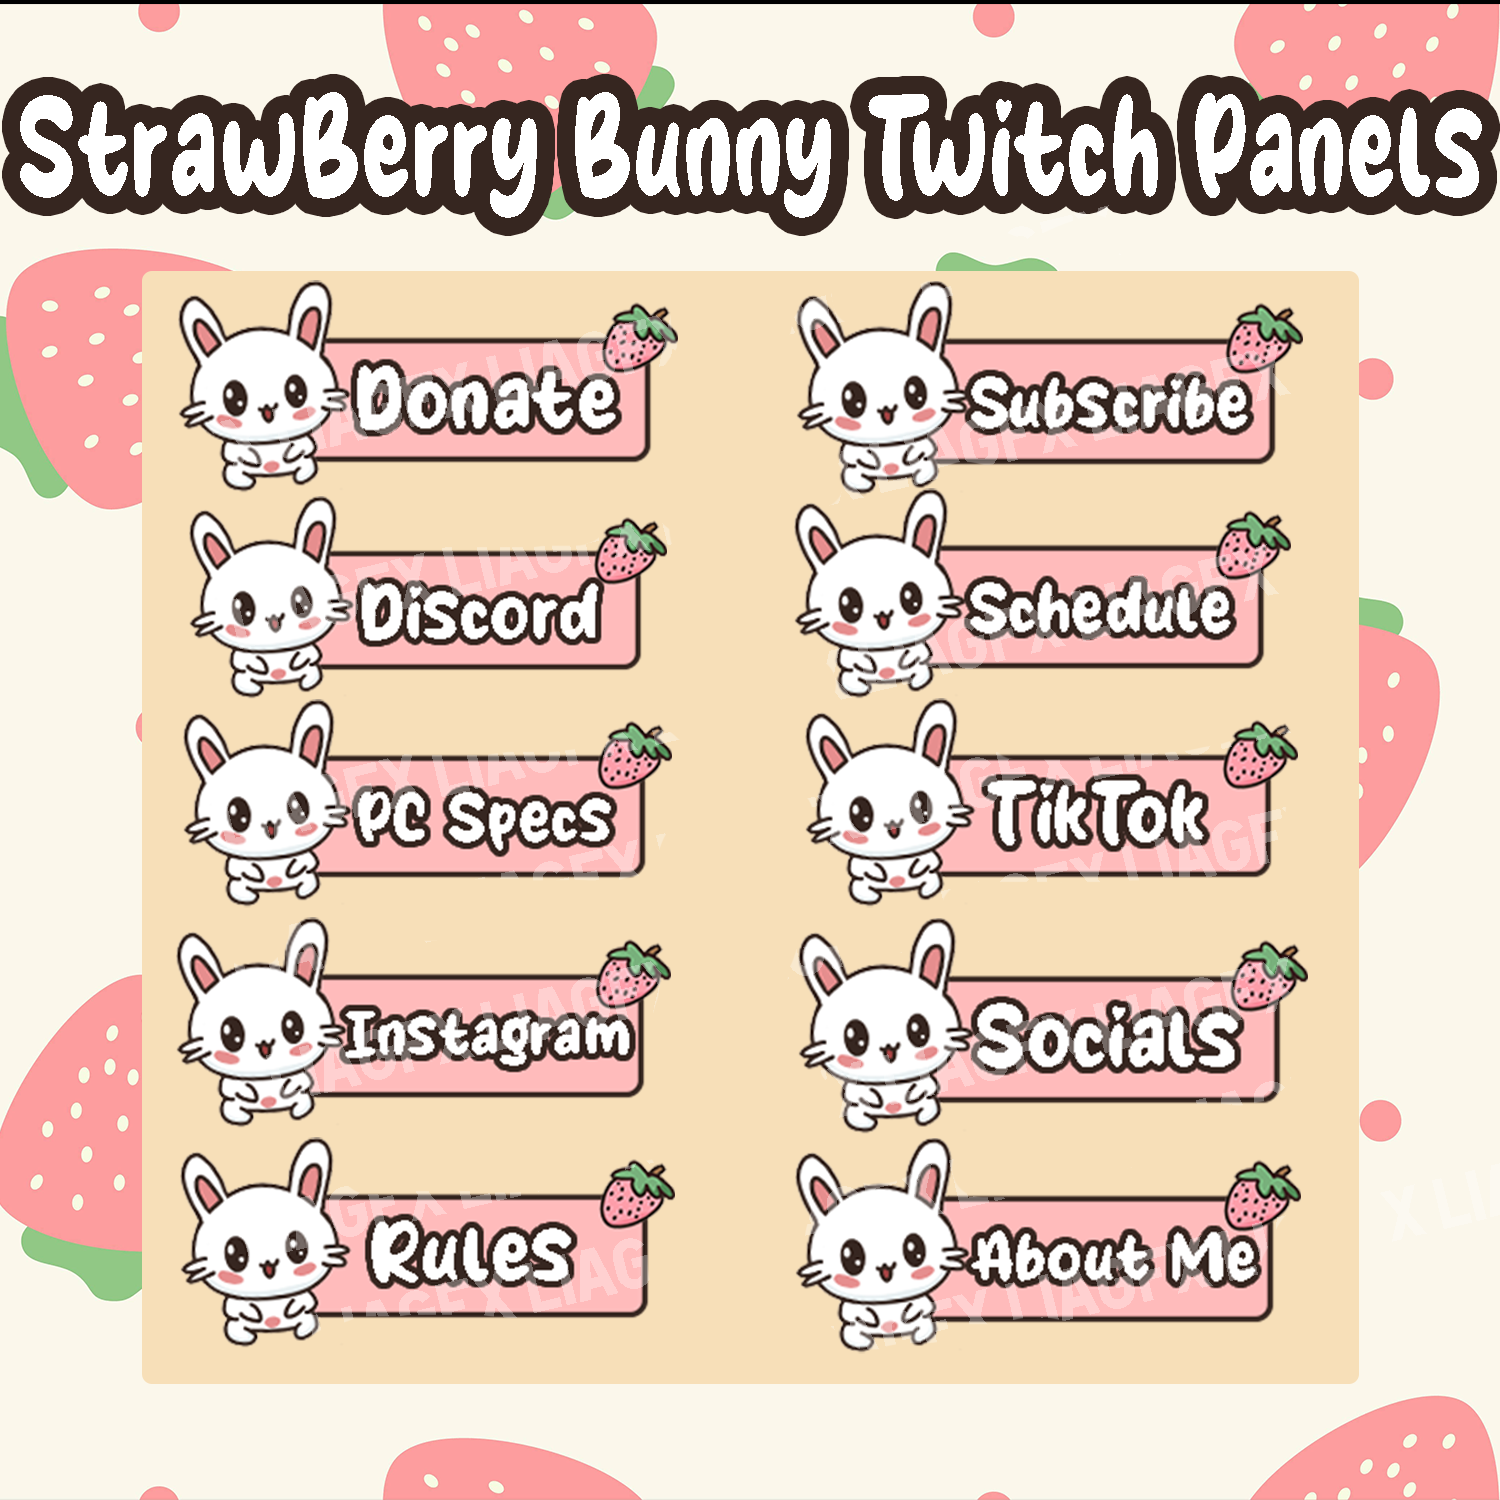 Strawberry Bunny Twitch Panels Vol. 1